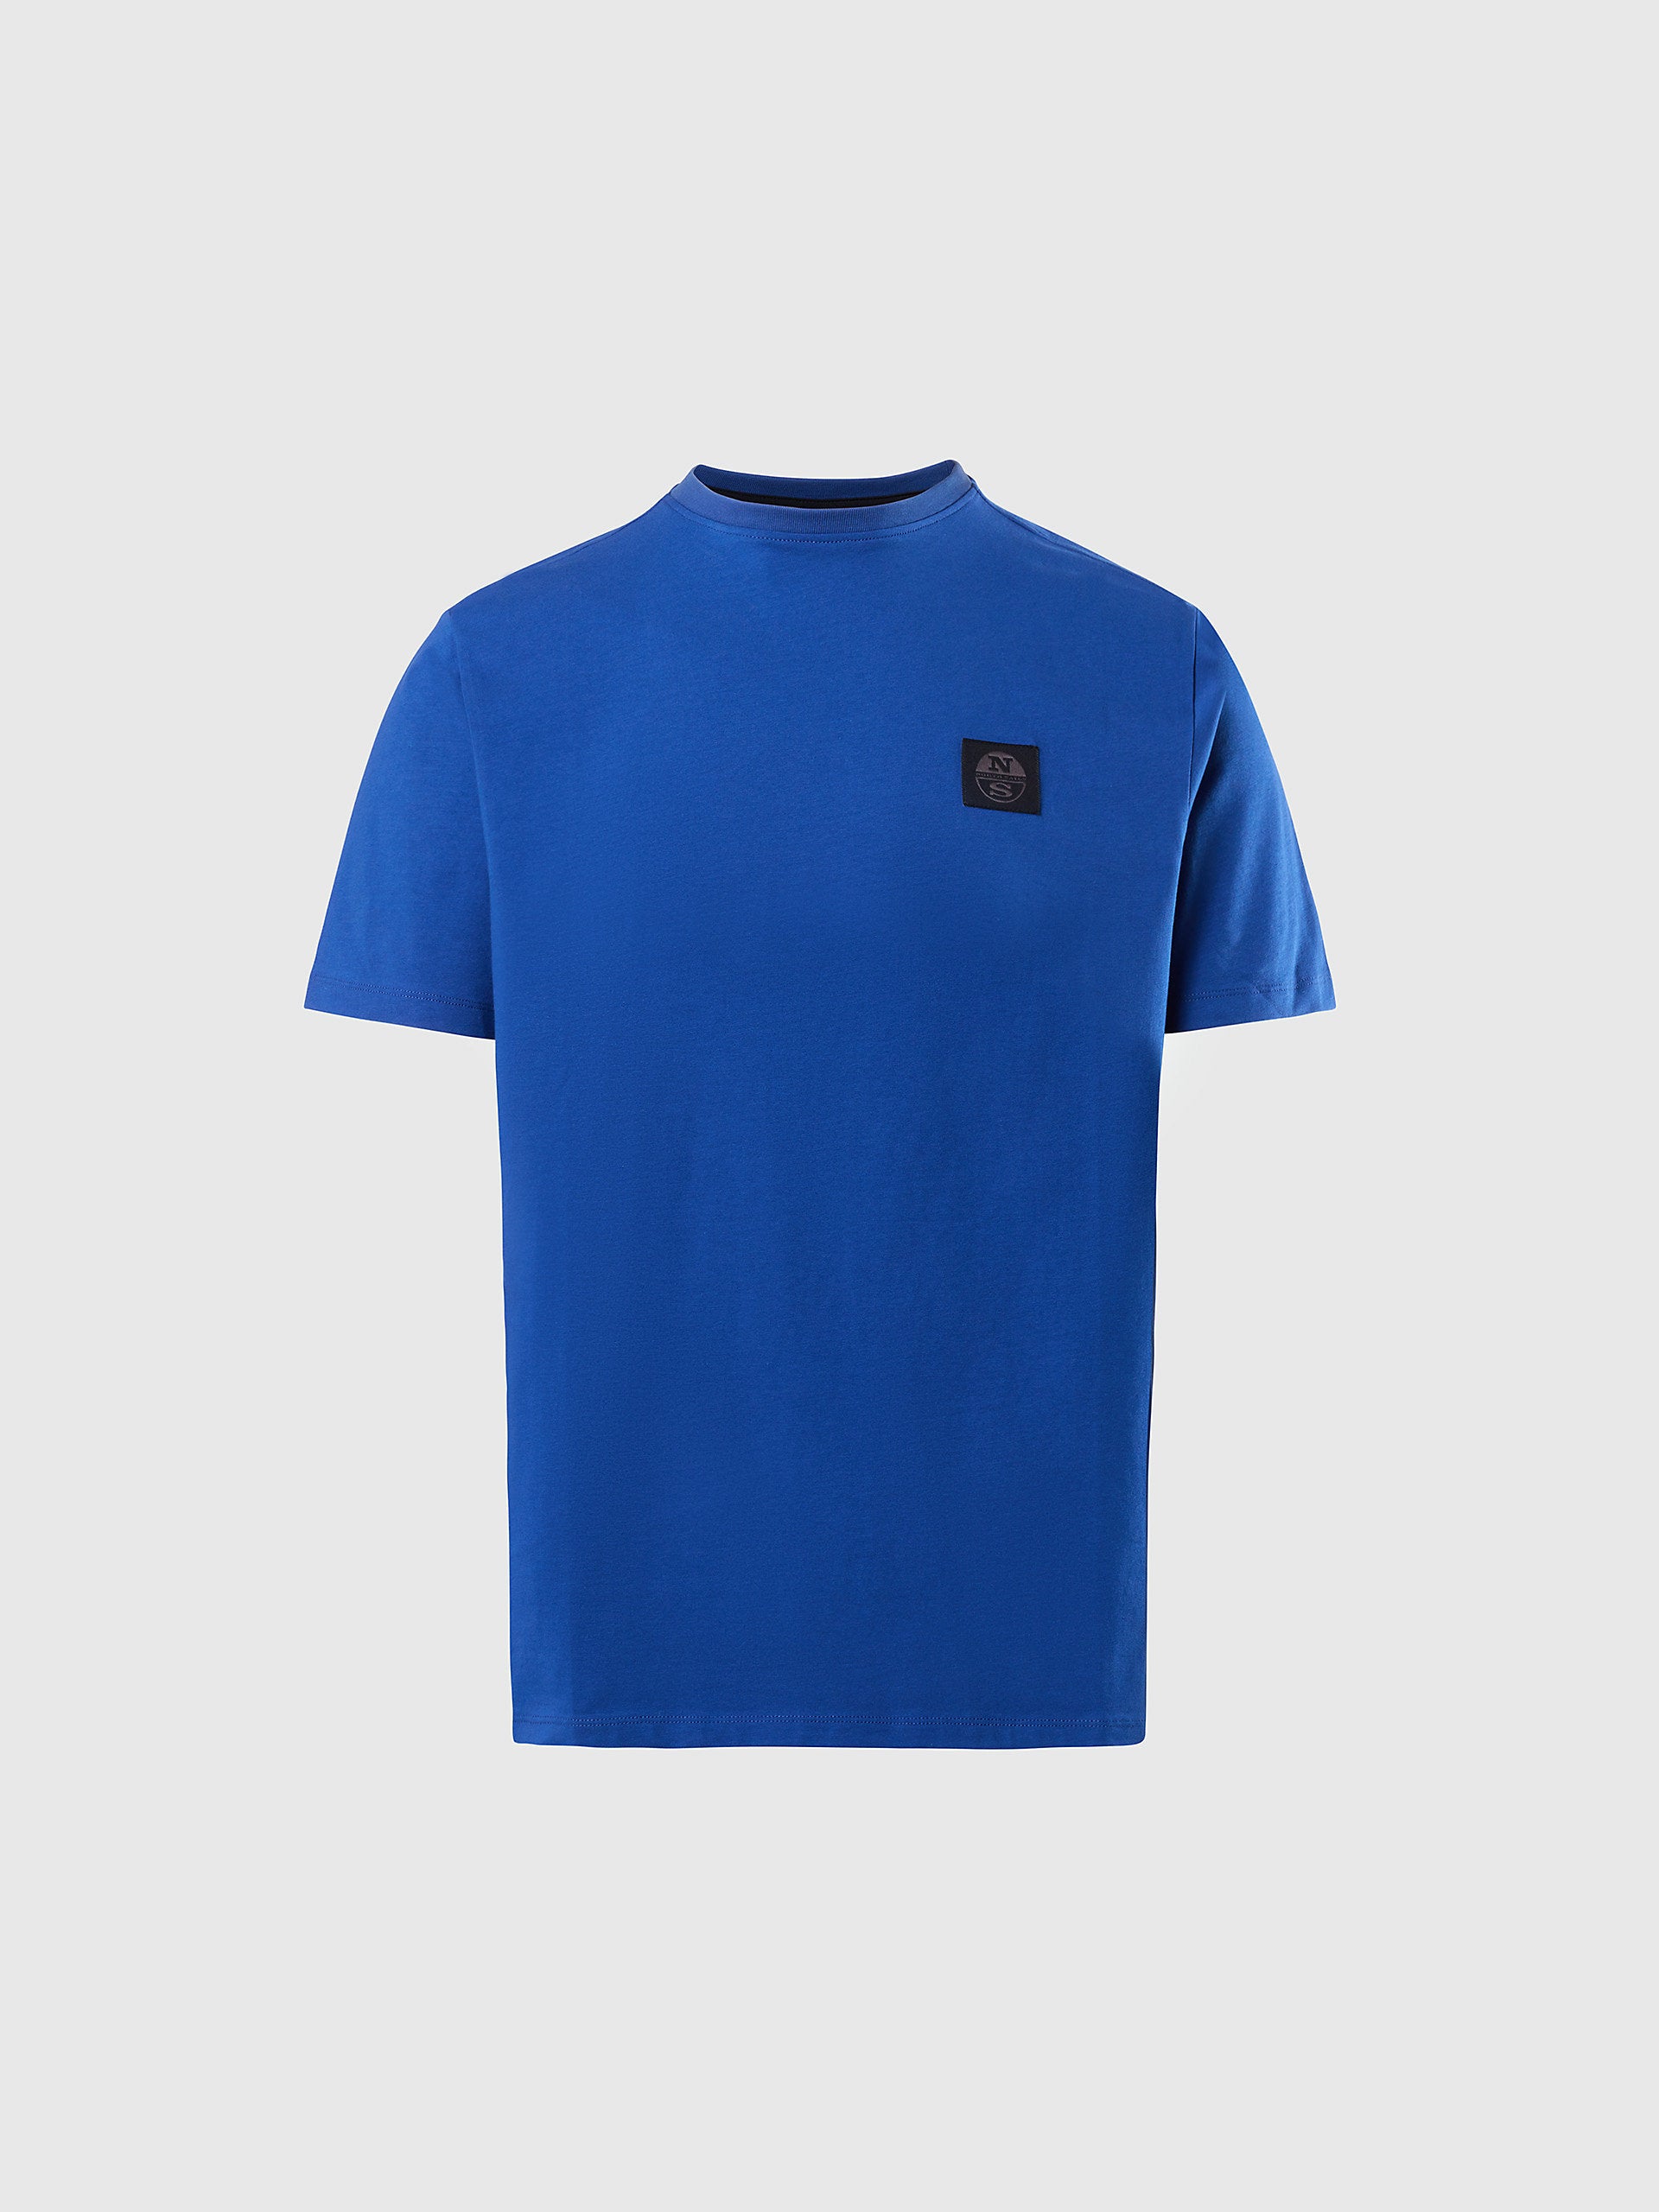 North Sails - T-shirt in cotone organicoNorth SailsOcean blueS